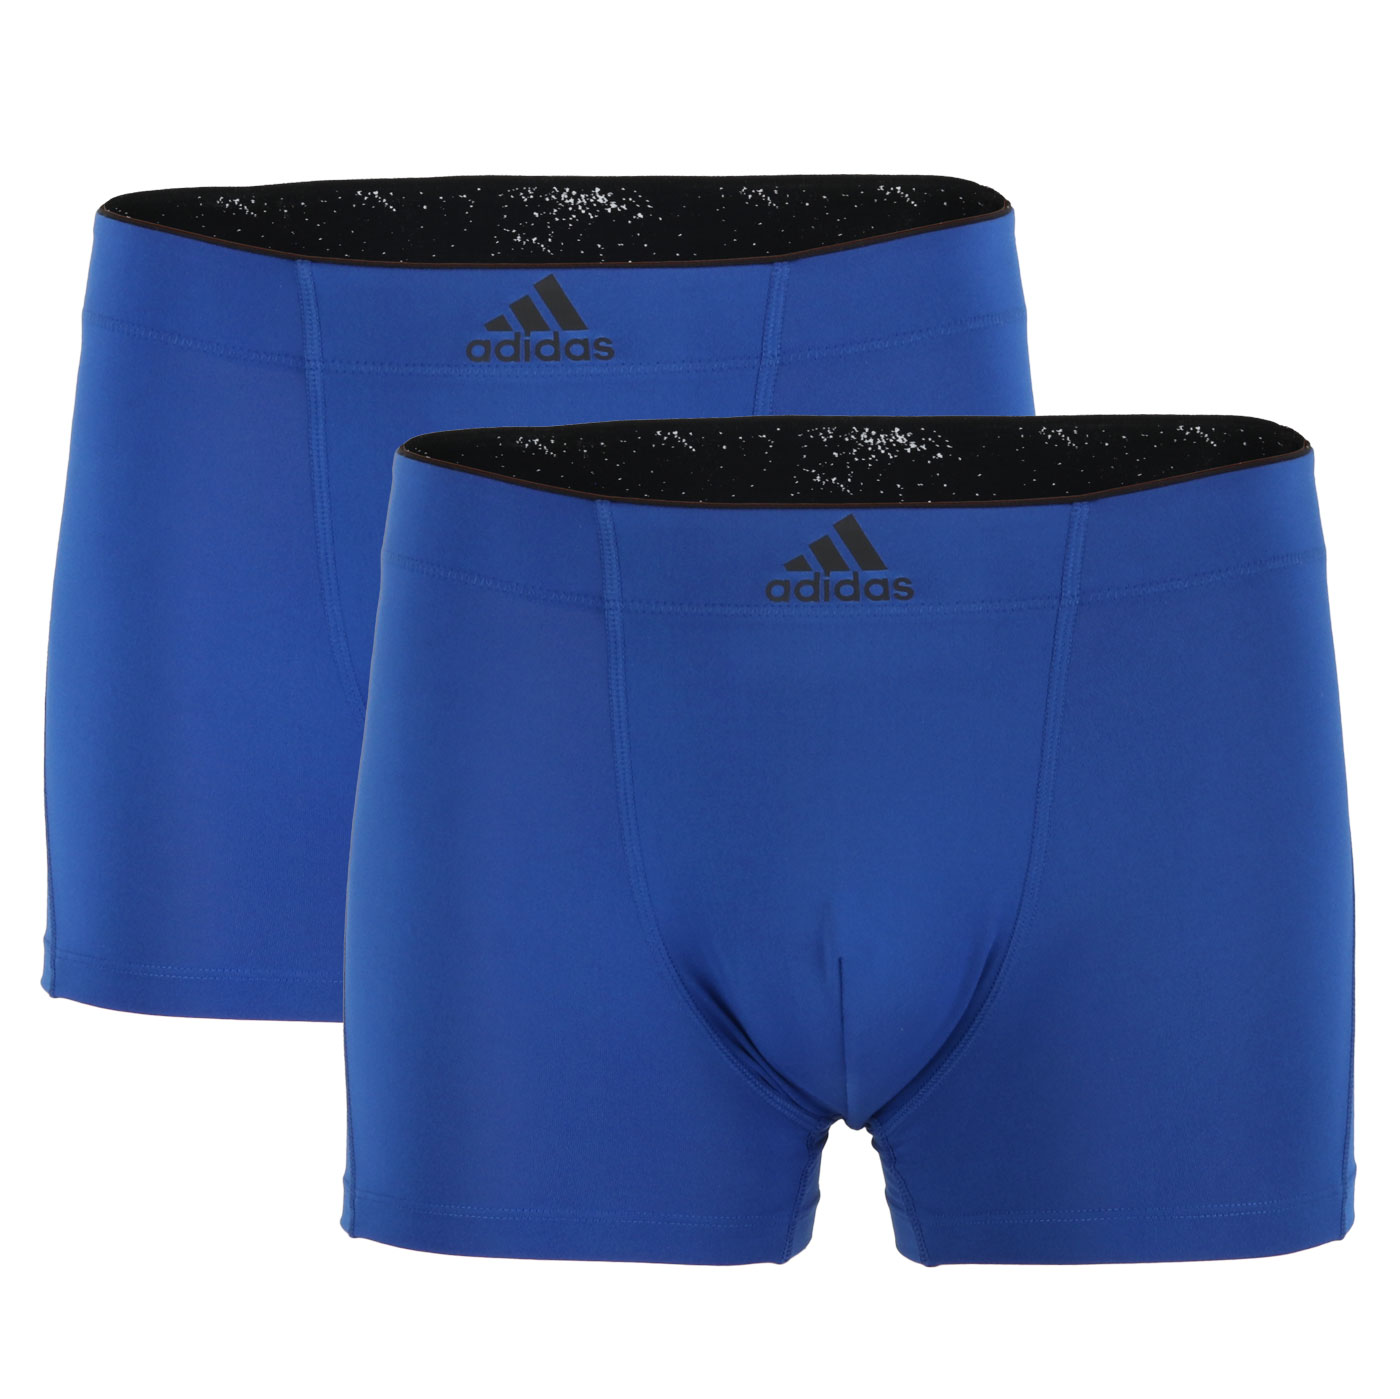 adidas Sports Underwear Trunk Men - 2 Pack - 833-royal blue